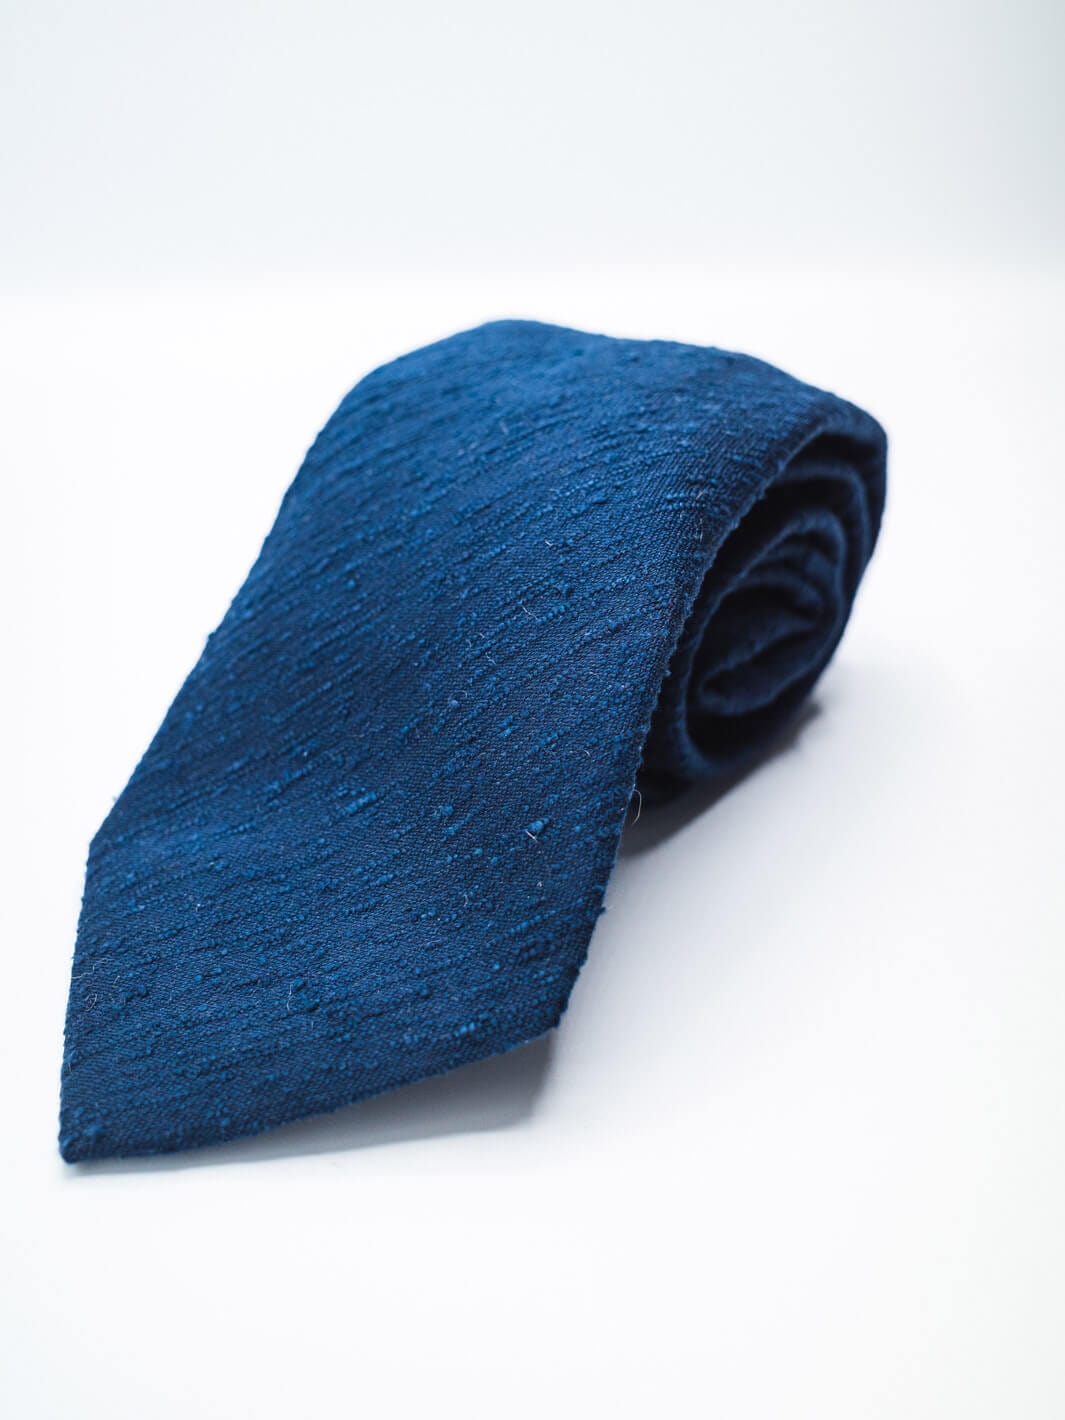 Paolo Albizzati Tie Silk Shantung Tie - Cobalt Blue